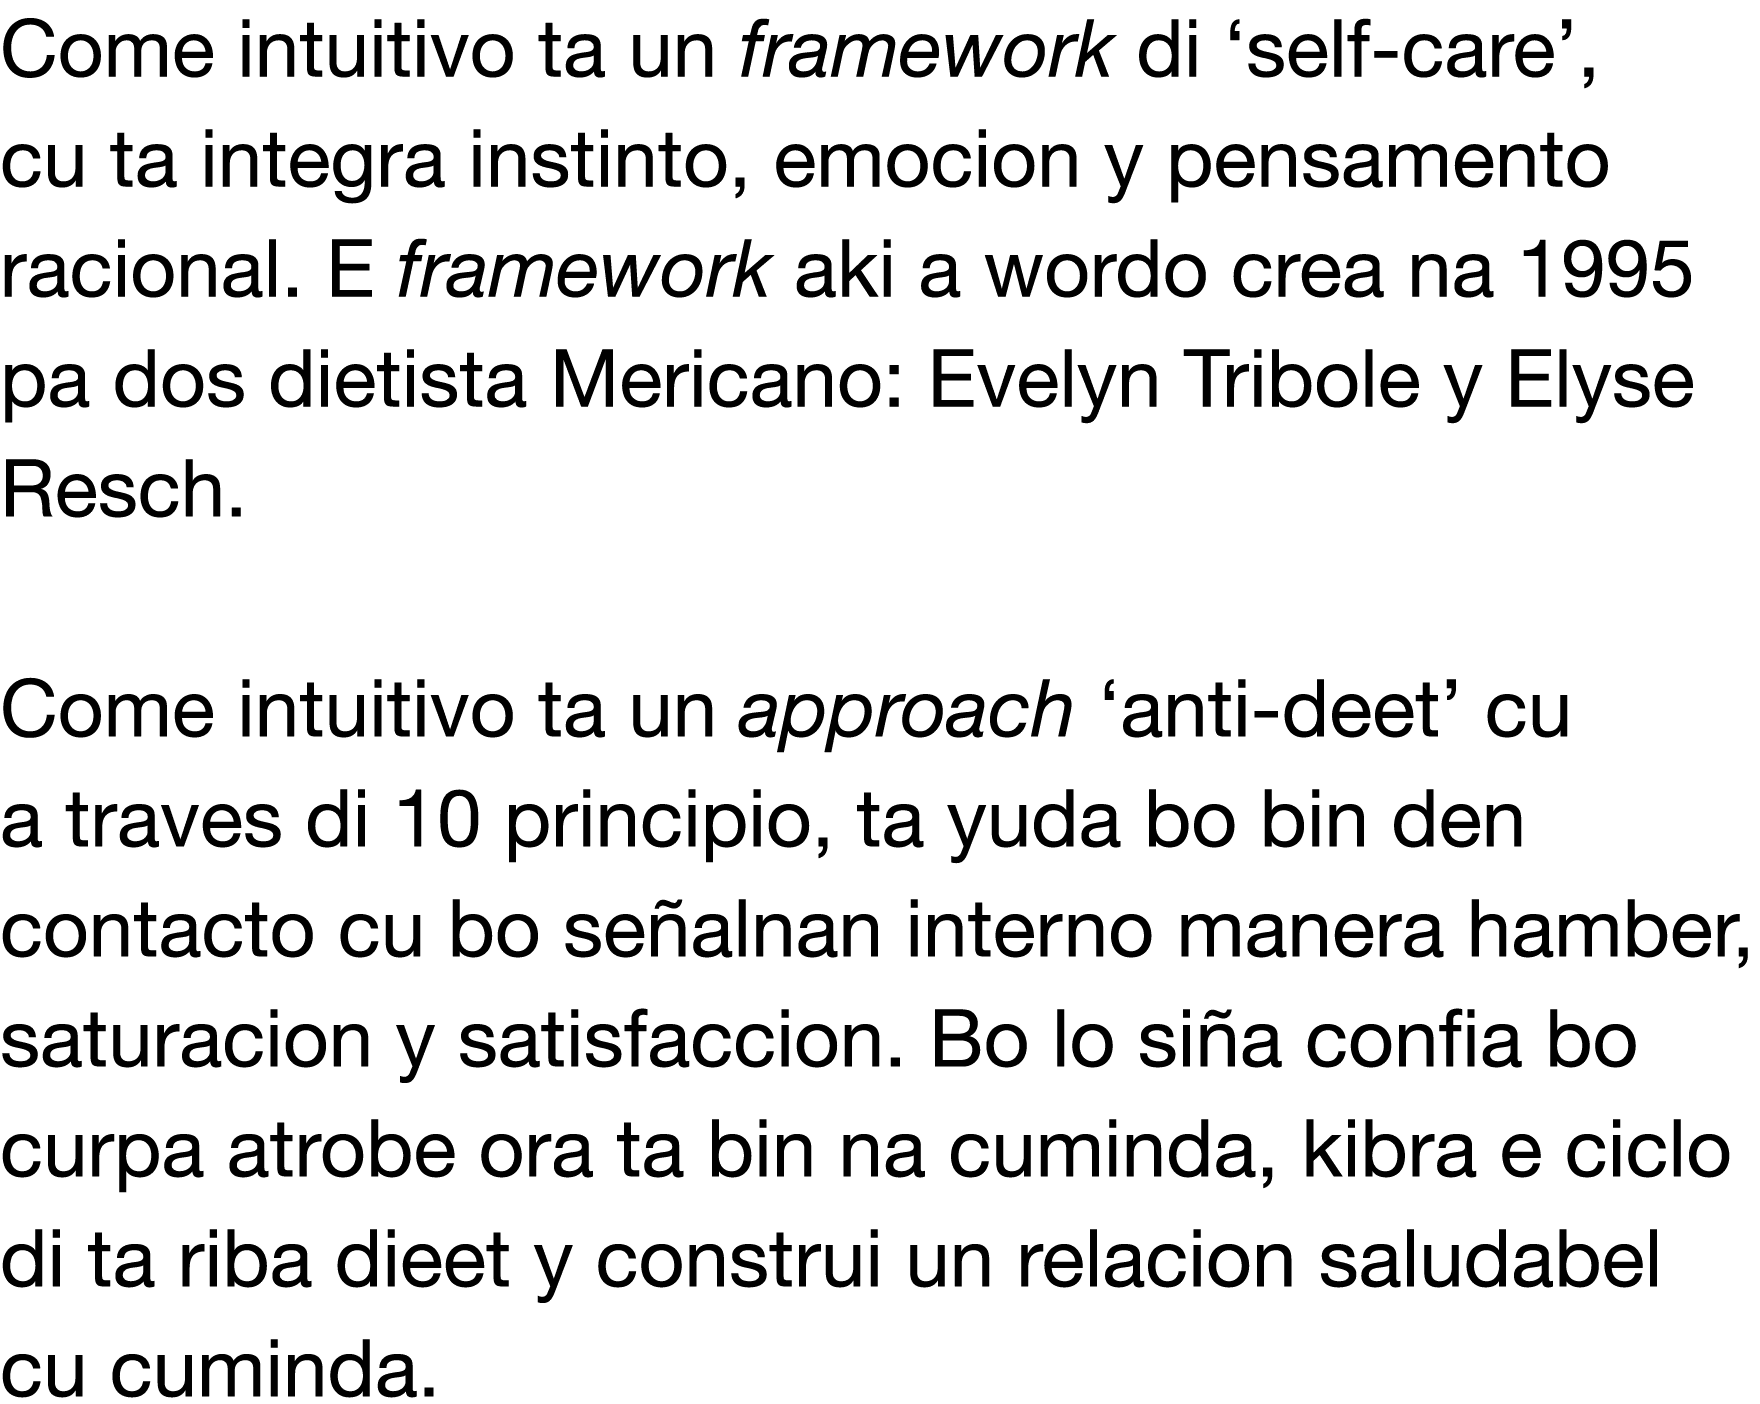 Come intuitivo ta un framework di  self-care , cu ta integra instinto, emocion y pensamento racional  E framework aki   